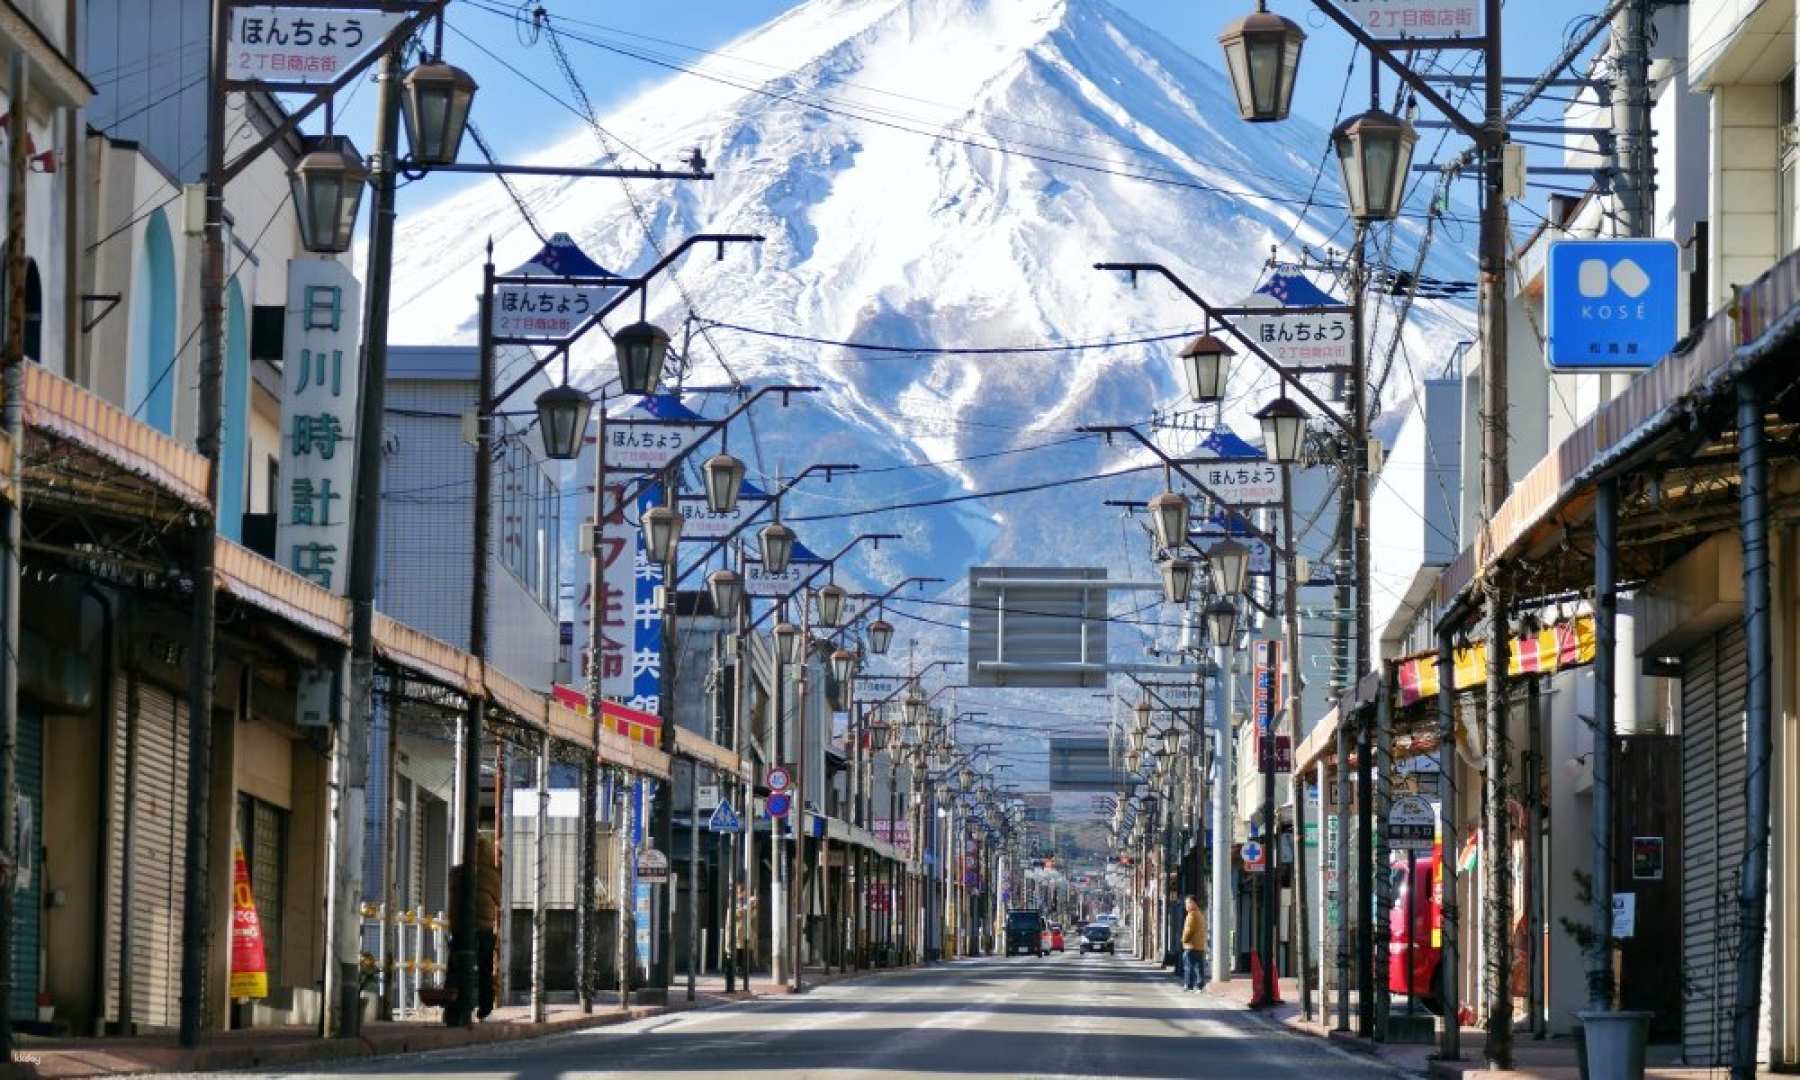 [One-day trip to Mount Fuji] Mount Fuji 5th Station & Sengen Park & Honmachi Shopping Street & Oishi Park (optional meal plan) | Depart from Shinjuku